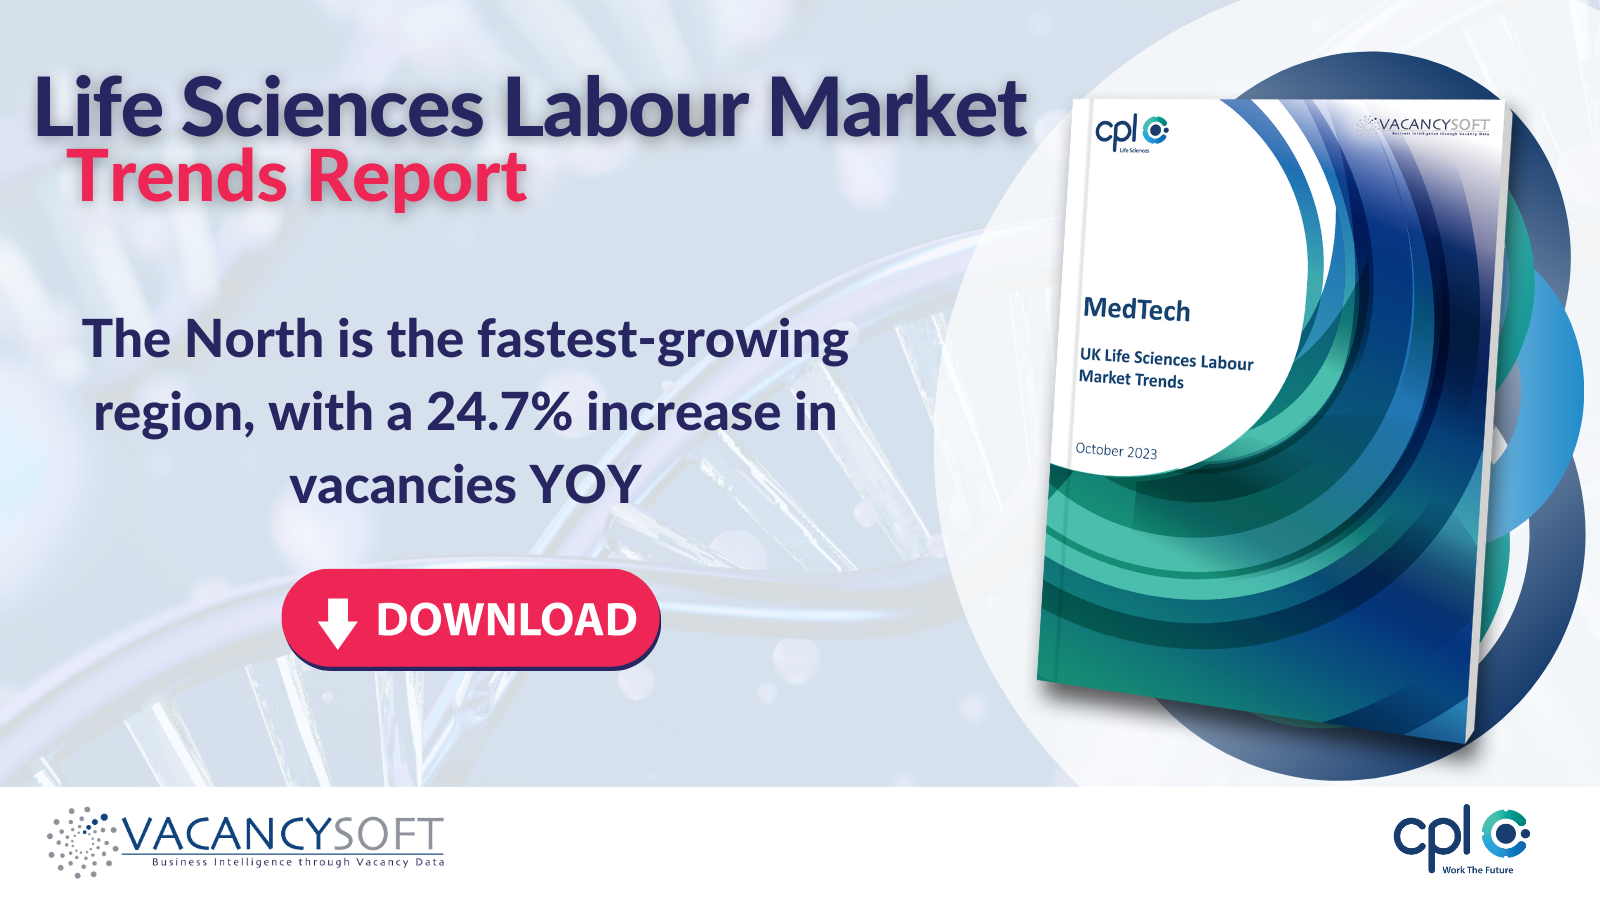 MedTech – UK Life Sciences Labour Market Trends, October 2023